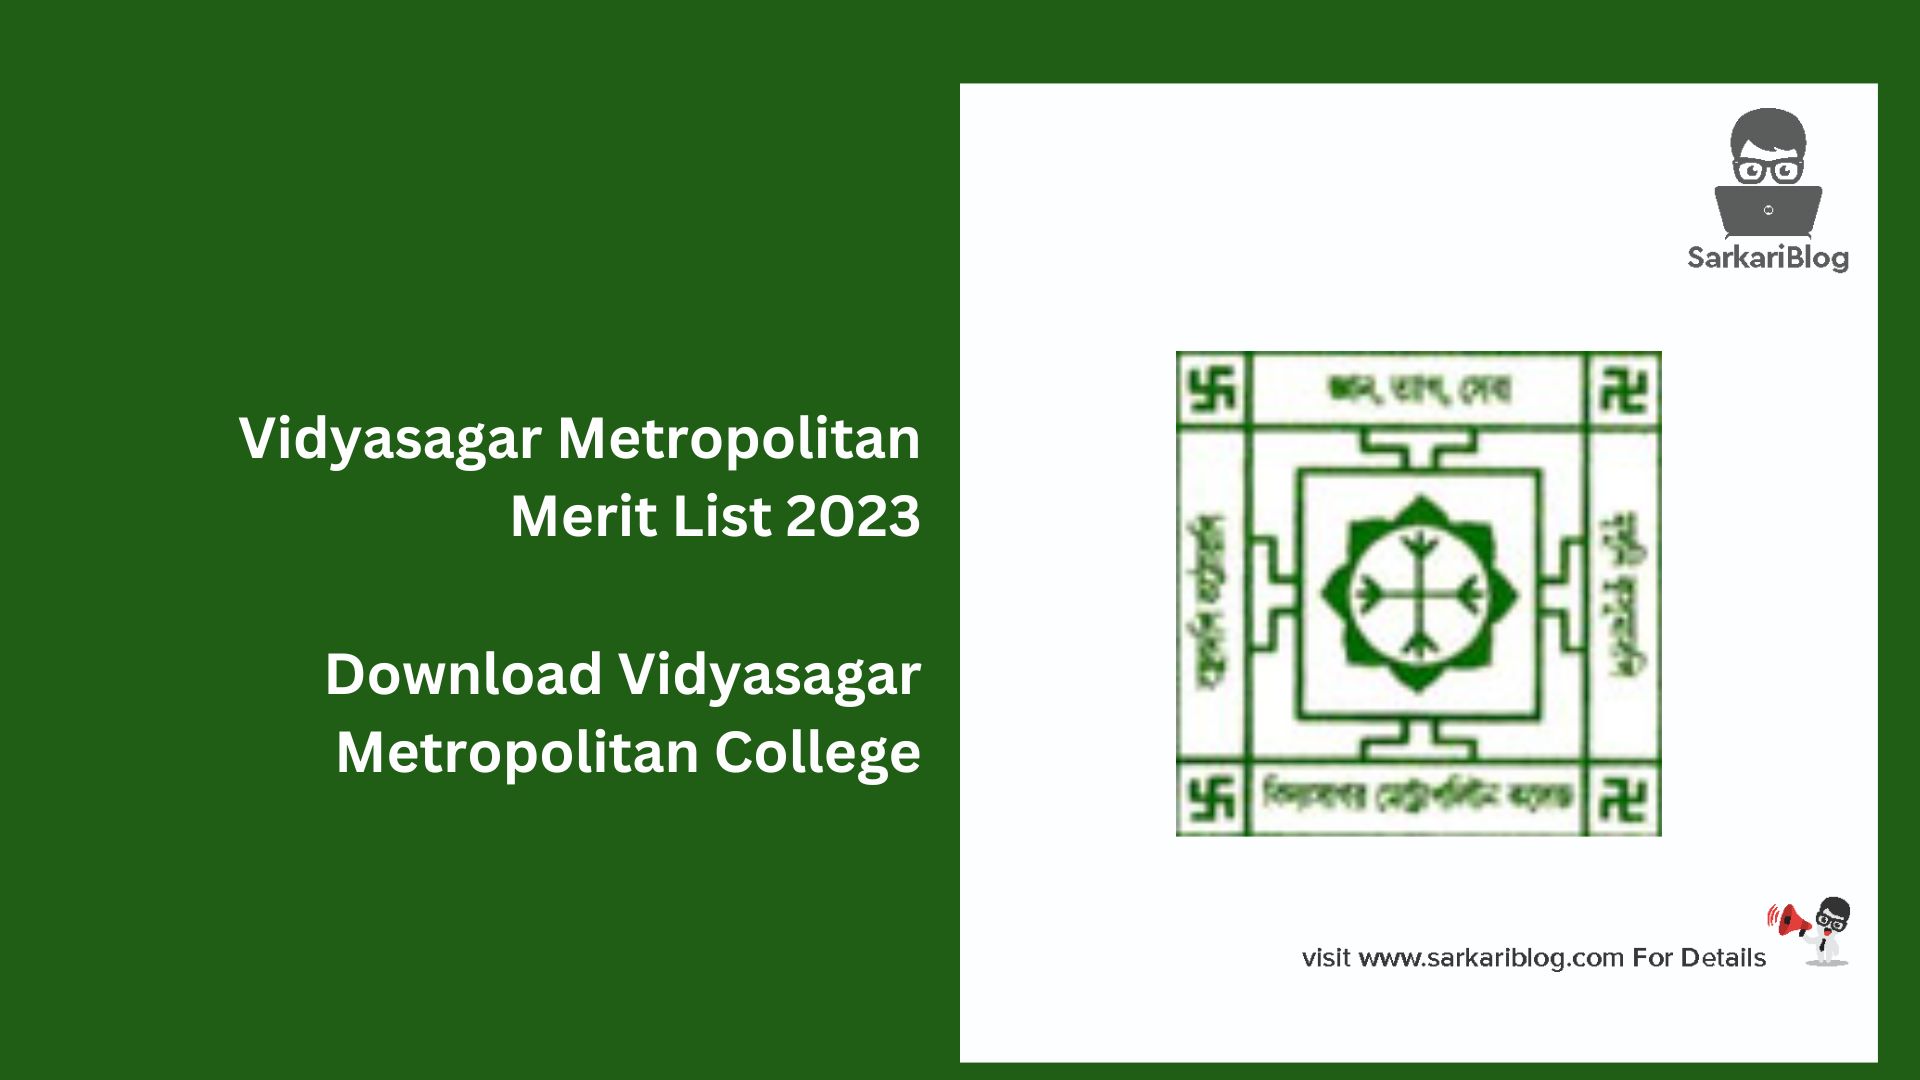 Vidyasagar Metropolitan Merit List 2023